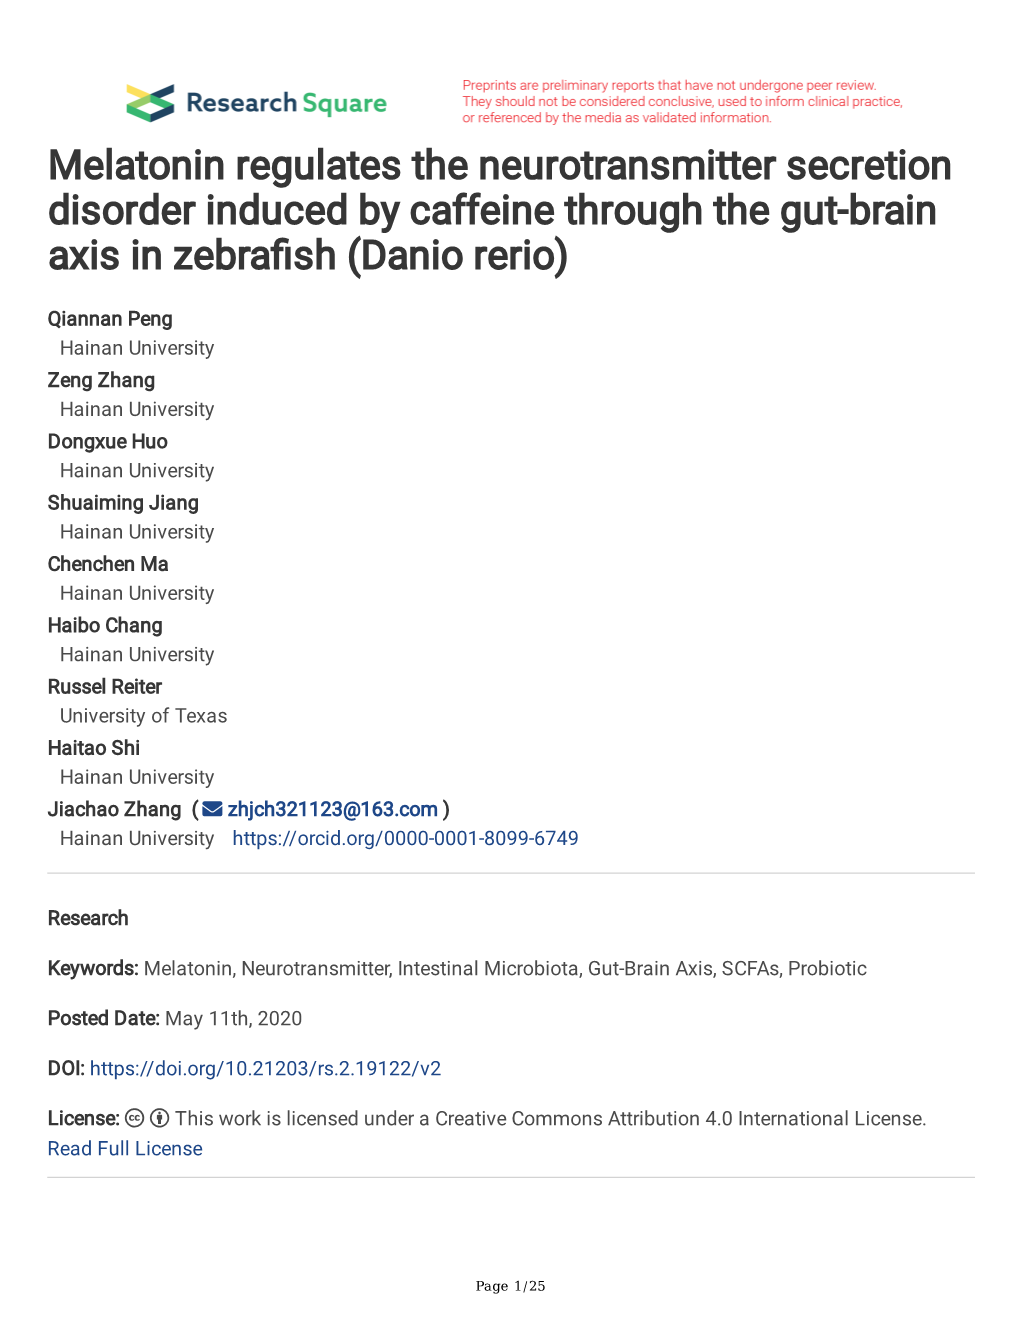 Melatonin Regulates the Neurotransmitter Secretion Disorder Induced by Caffeine Through the Gut-Brain Axis in Zebrafsh (Danio Rerio)